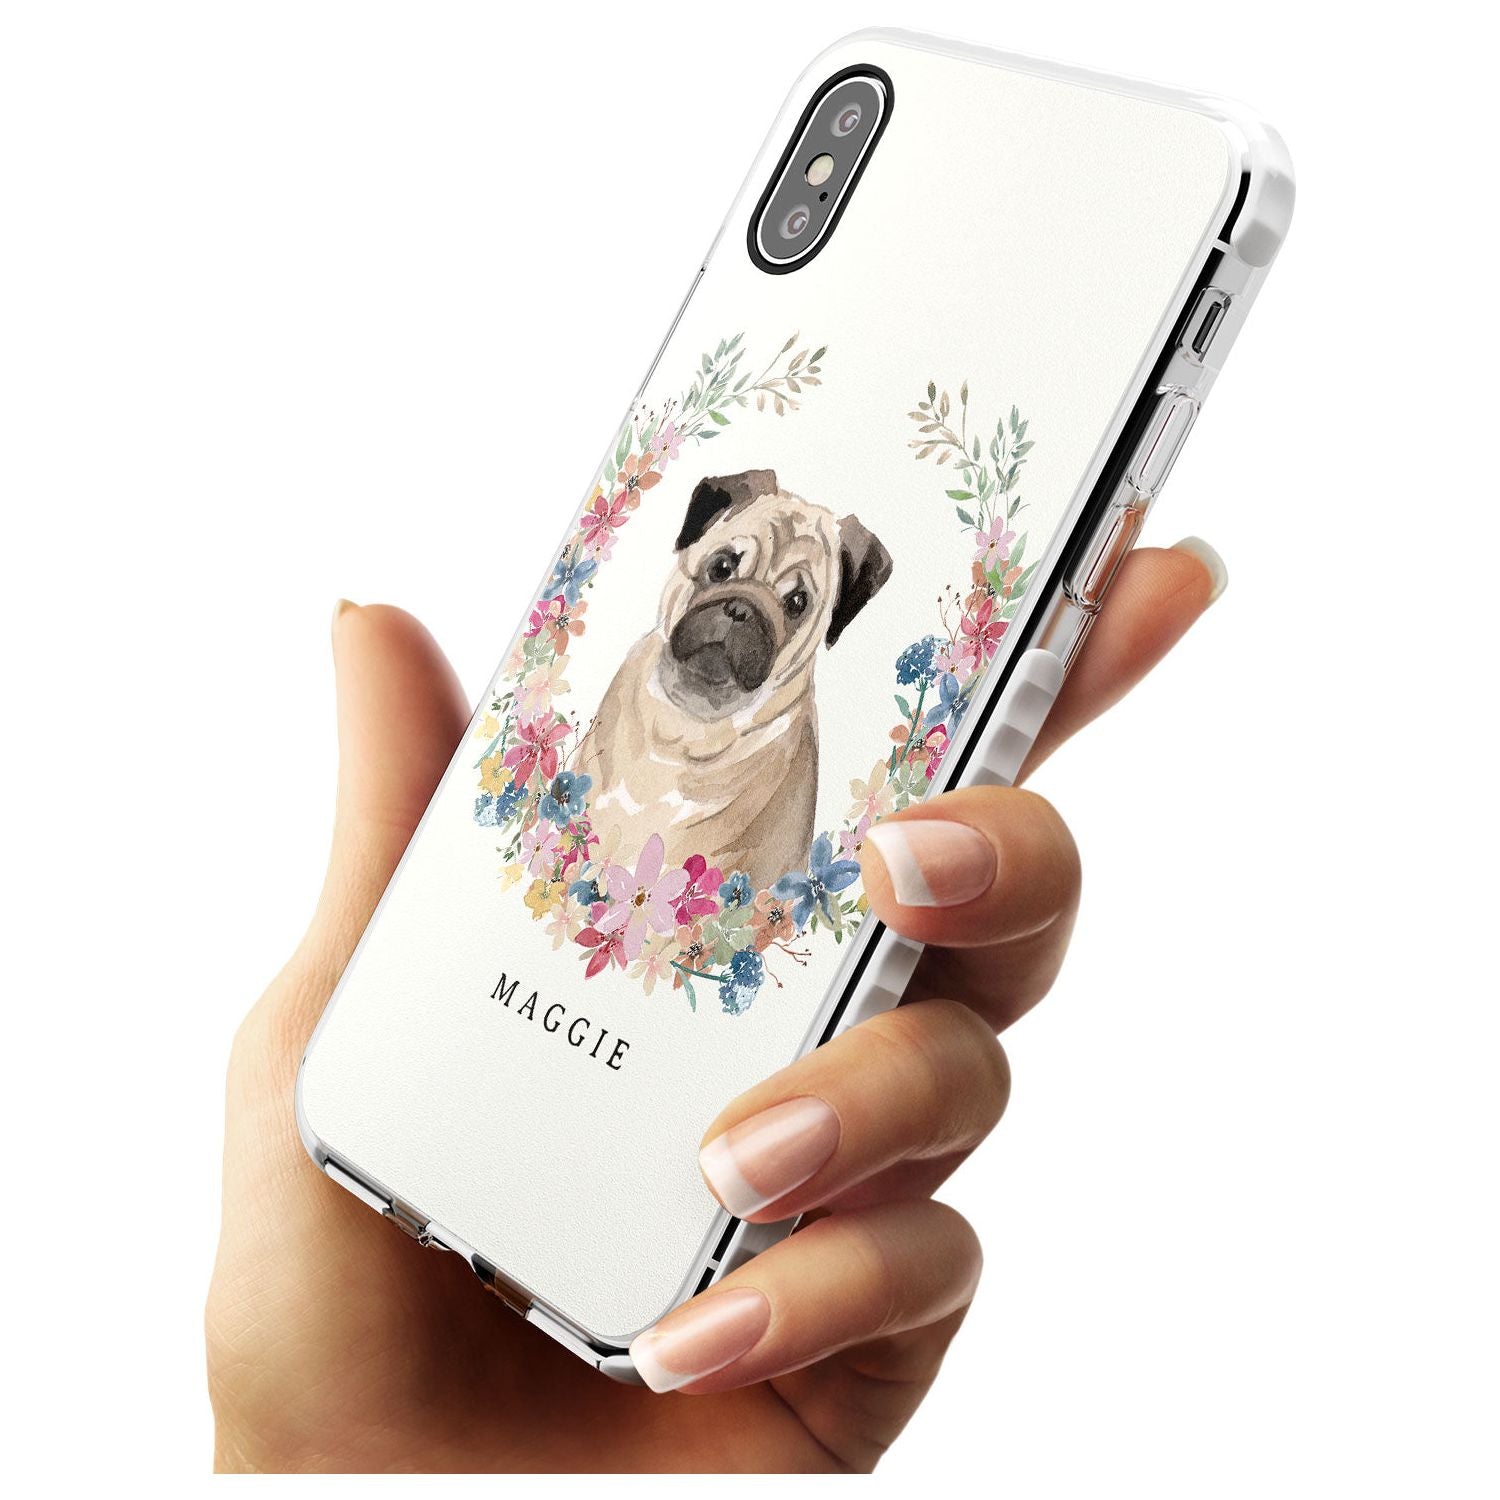 Pug - Watercolour Dog Portrait Impact Phone Case for iPhone X XS Max XR